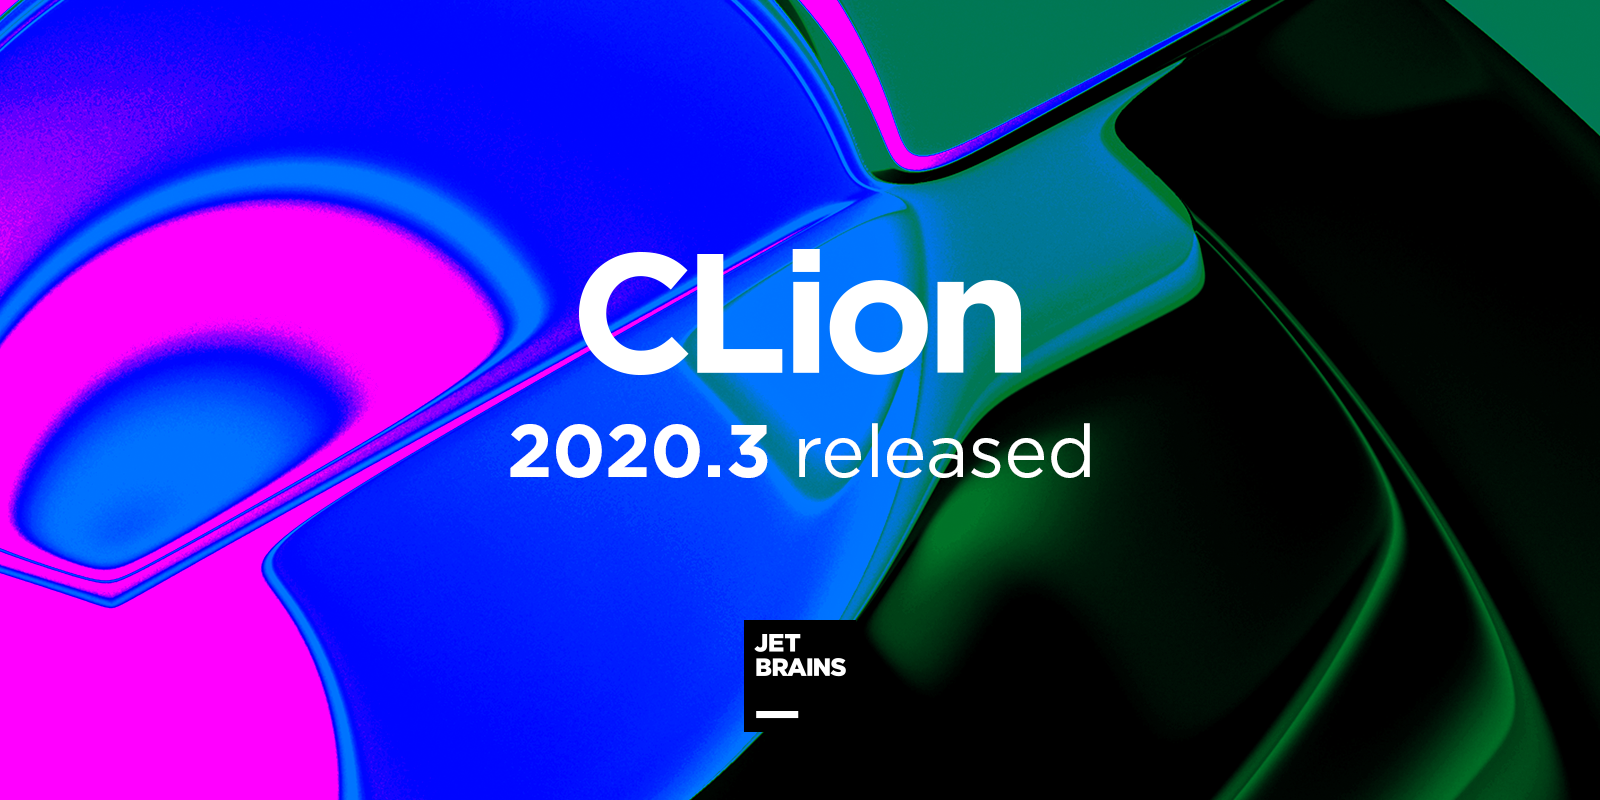 CLion 2020.3 release